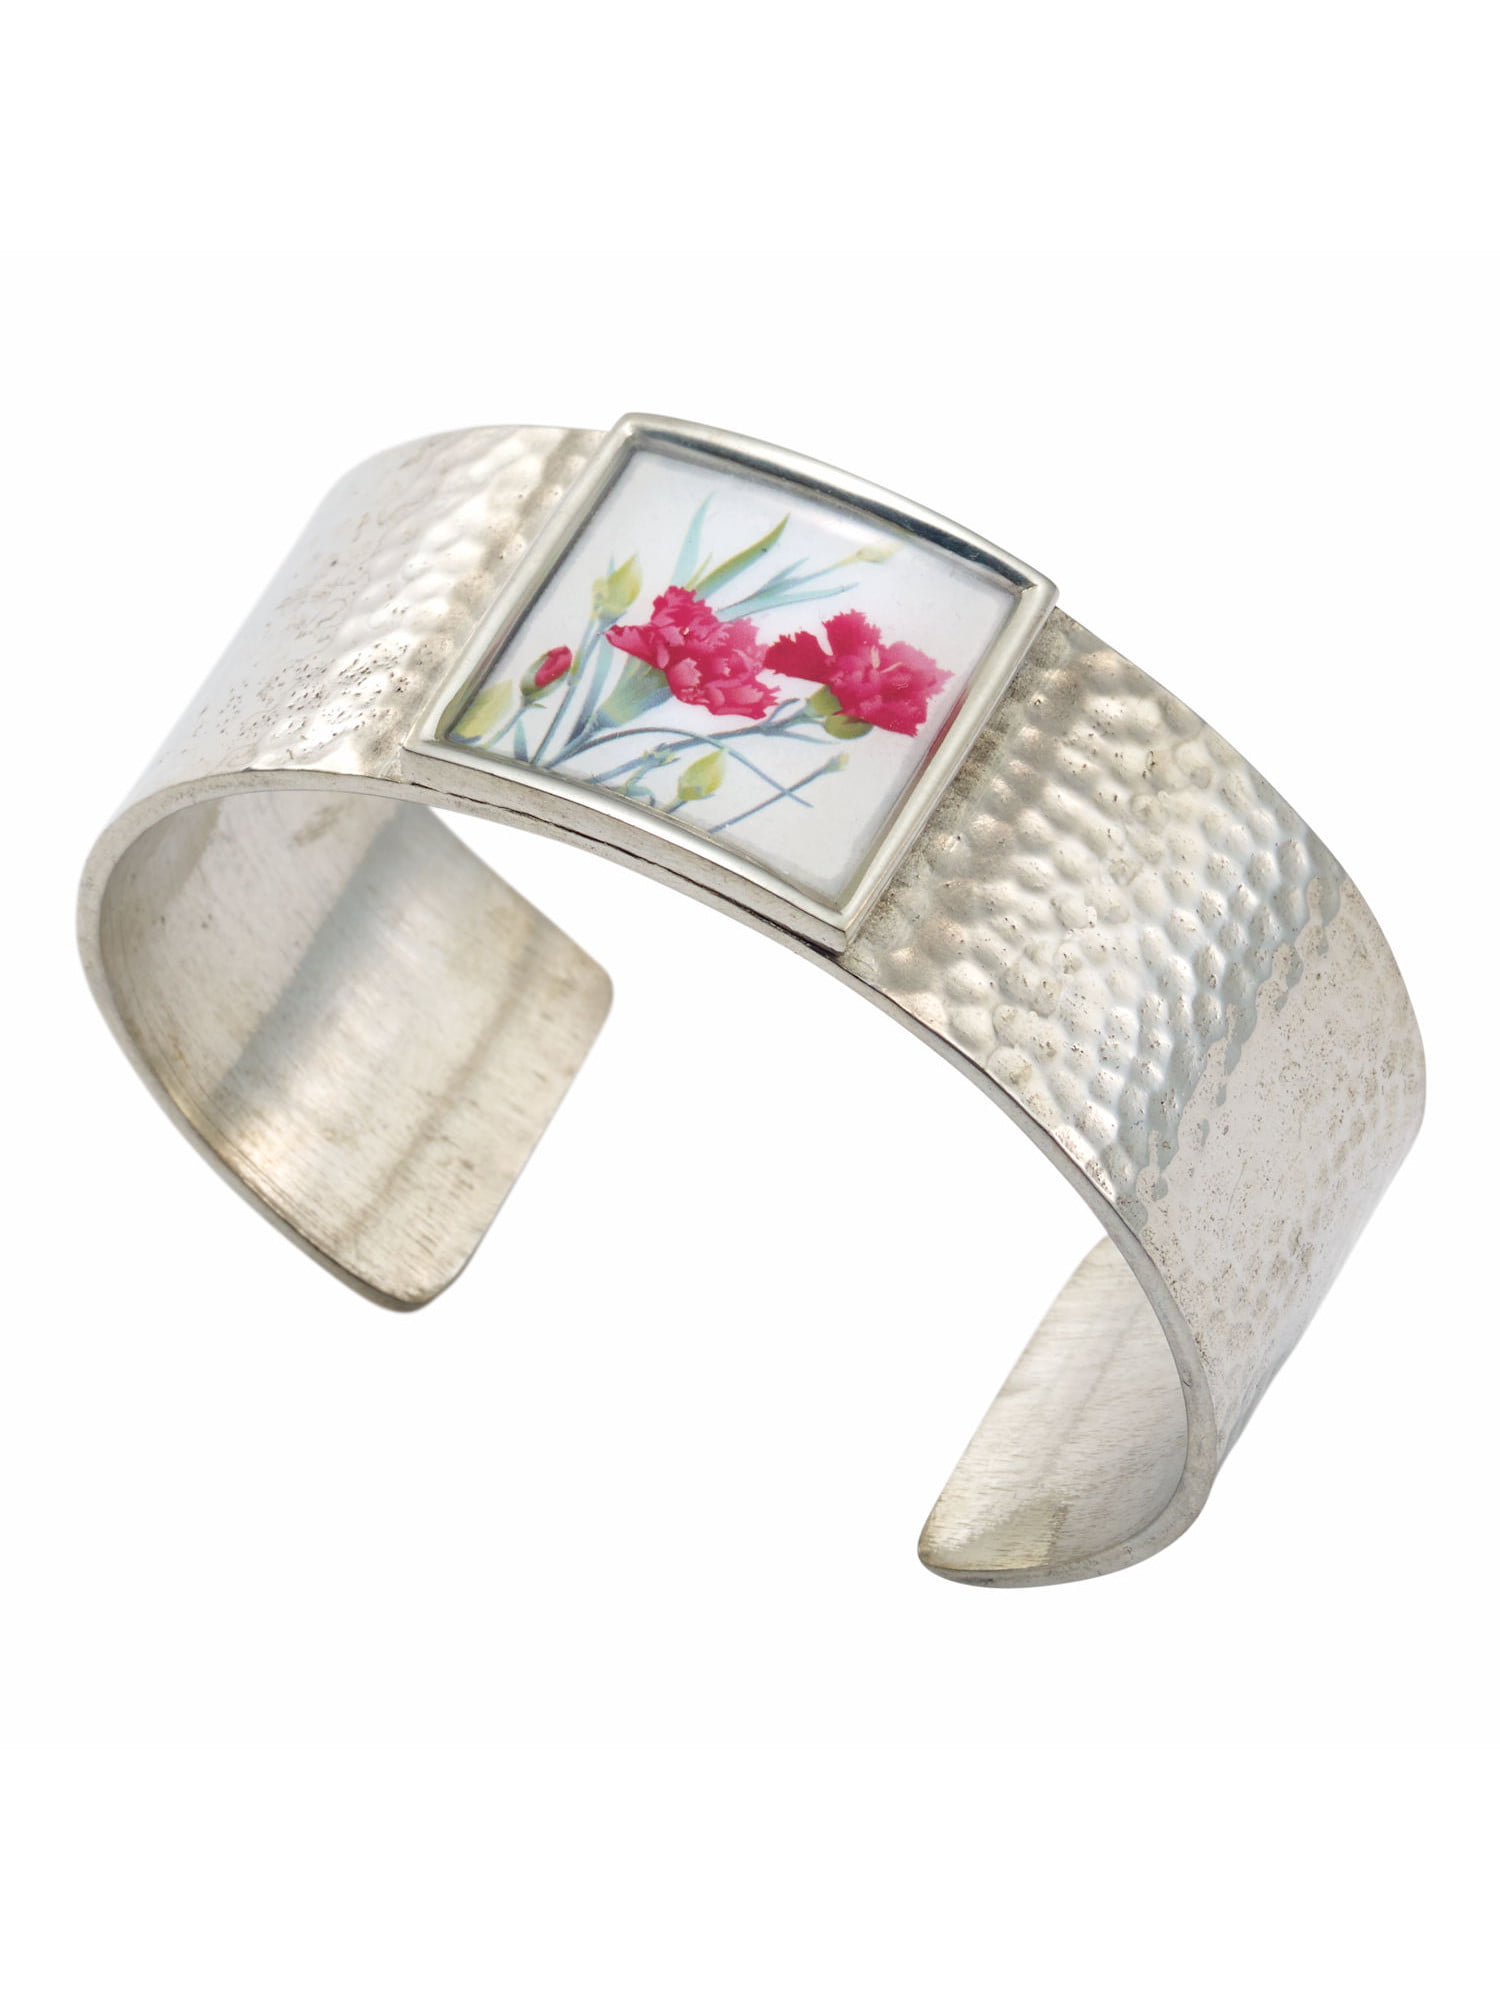 GiftJewelryShop Silver Plated Carnation for Mom Photo Topaz Crystal November Birthstone Flower Dangle Charm Bracelets 